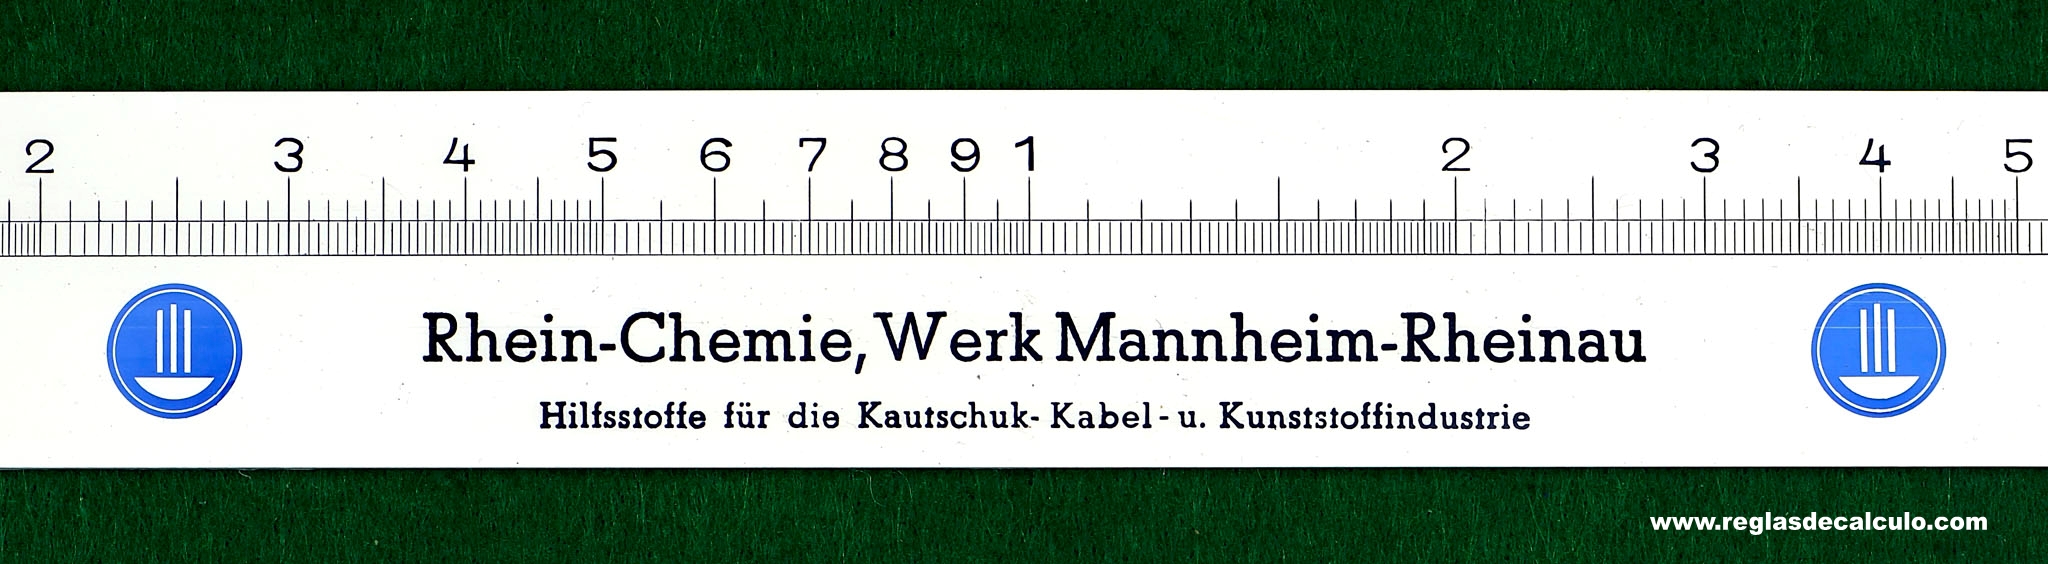 Faber Castell Steinmüller Regla de Calculo Slide rule